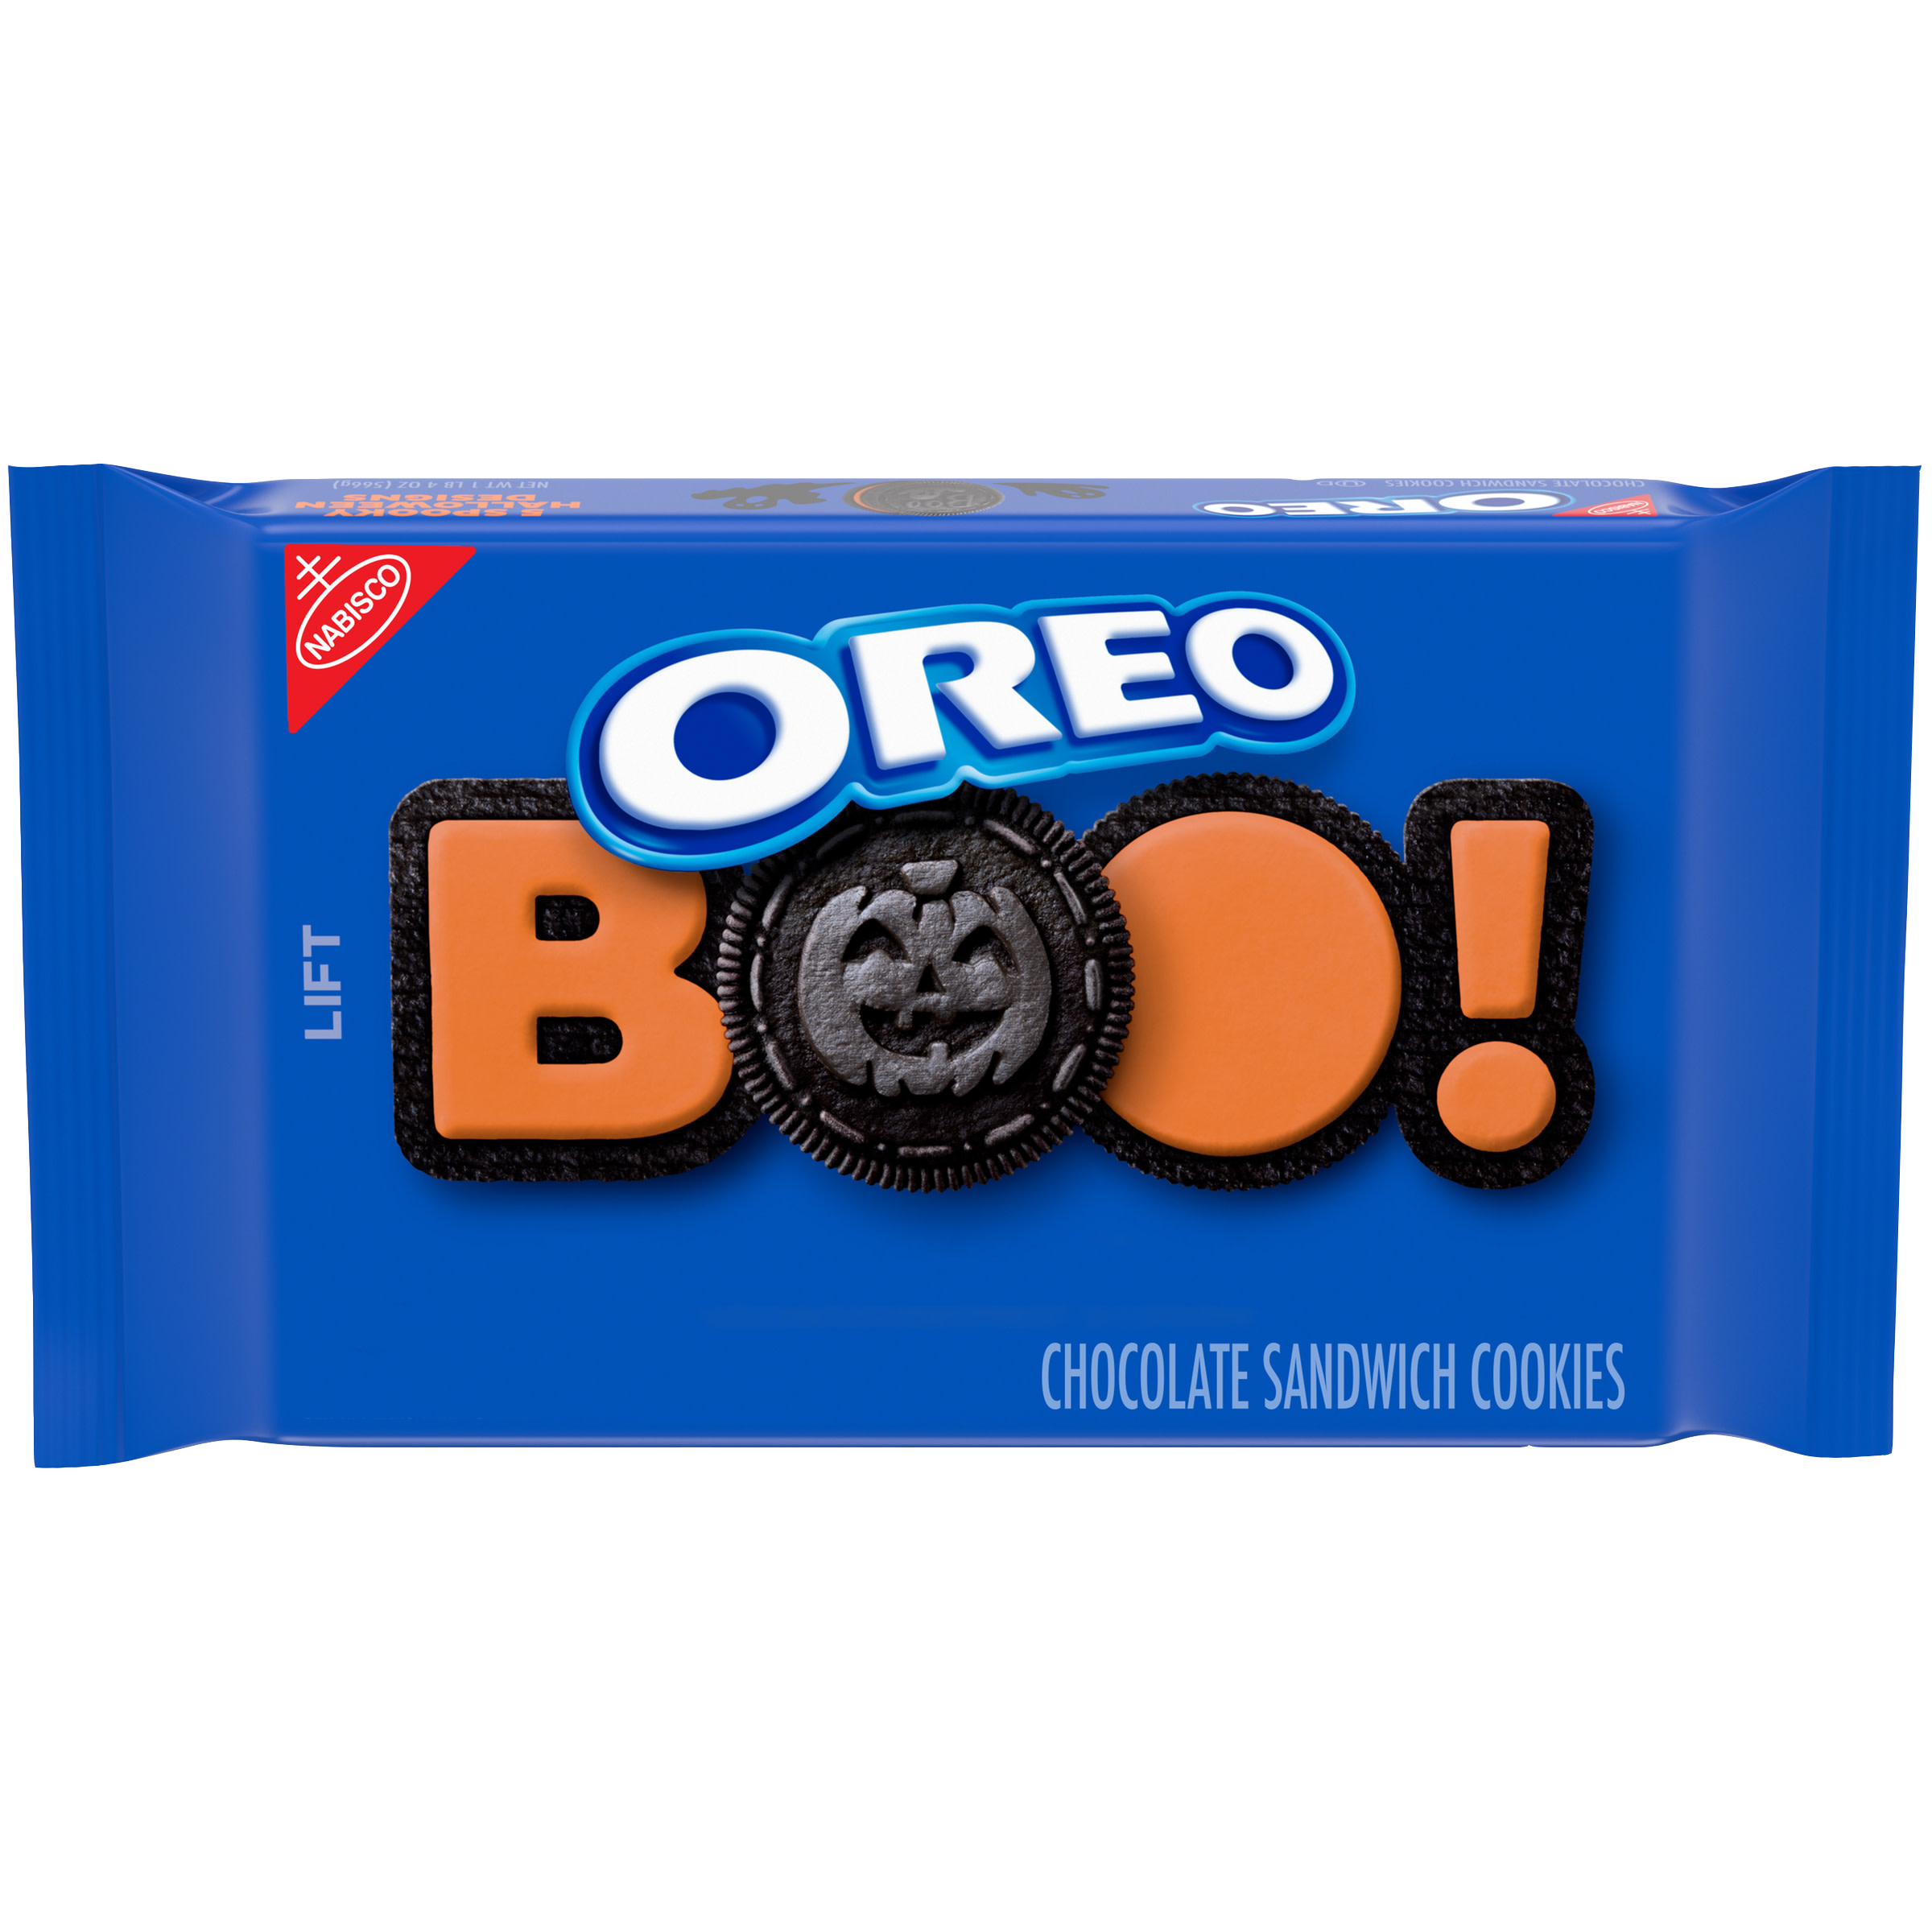 Oreo Boo Haney Packaging